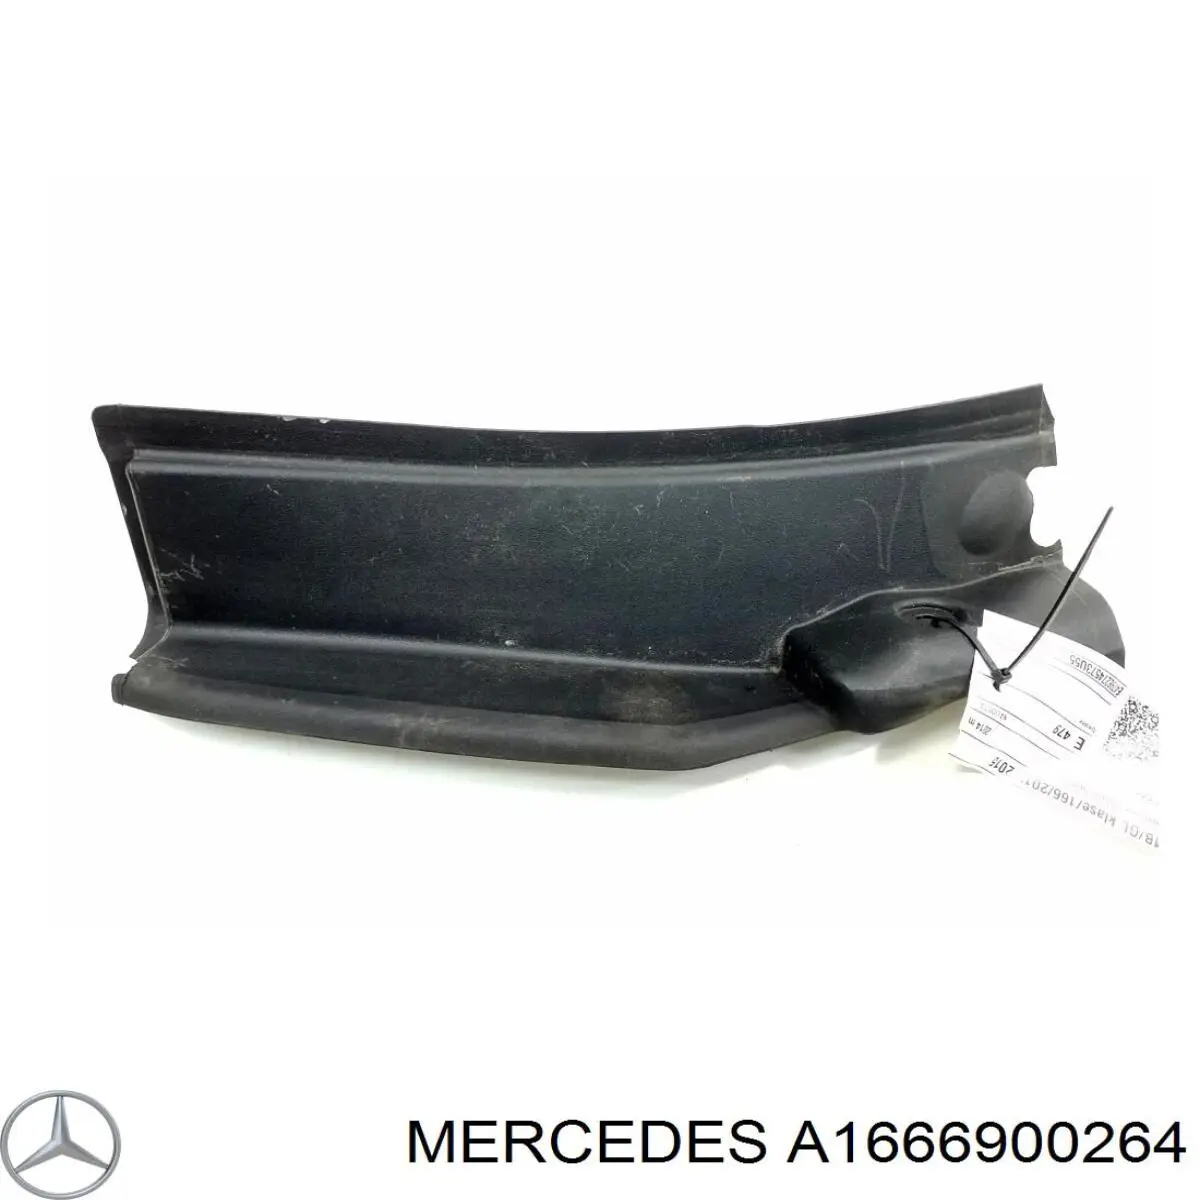 A1666900264 Mercedes 